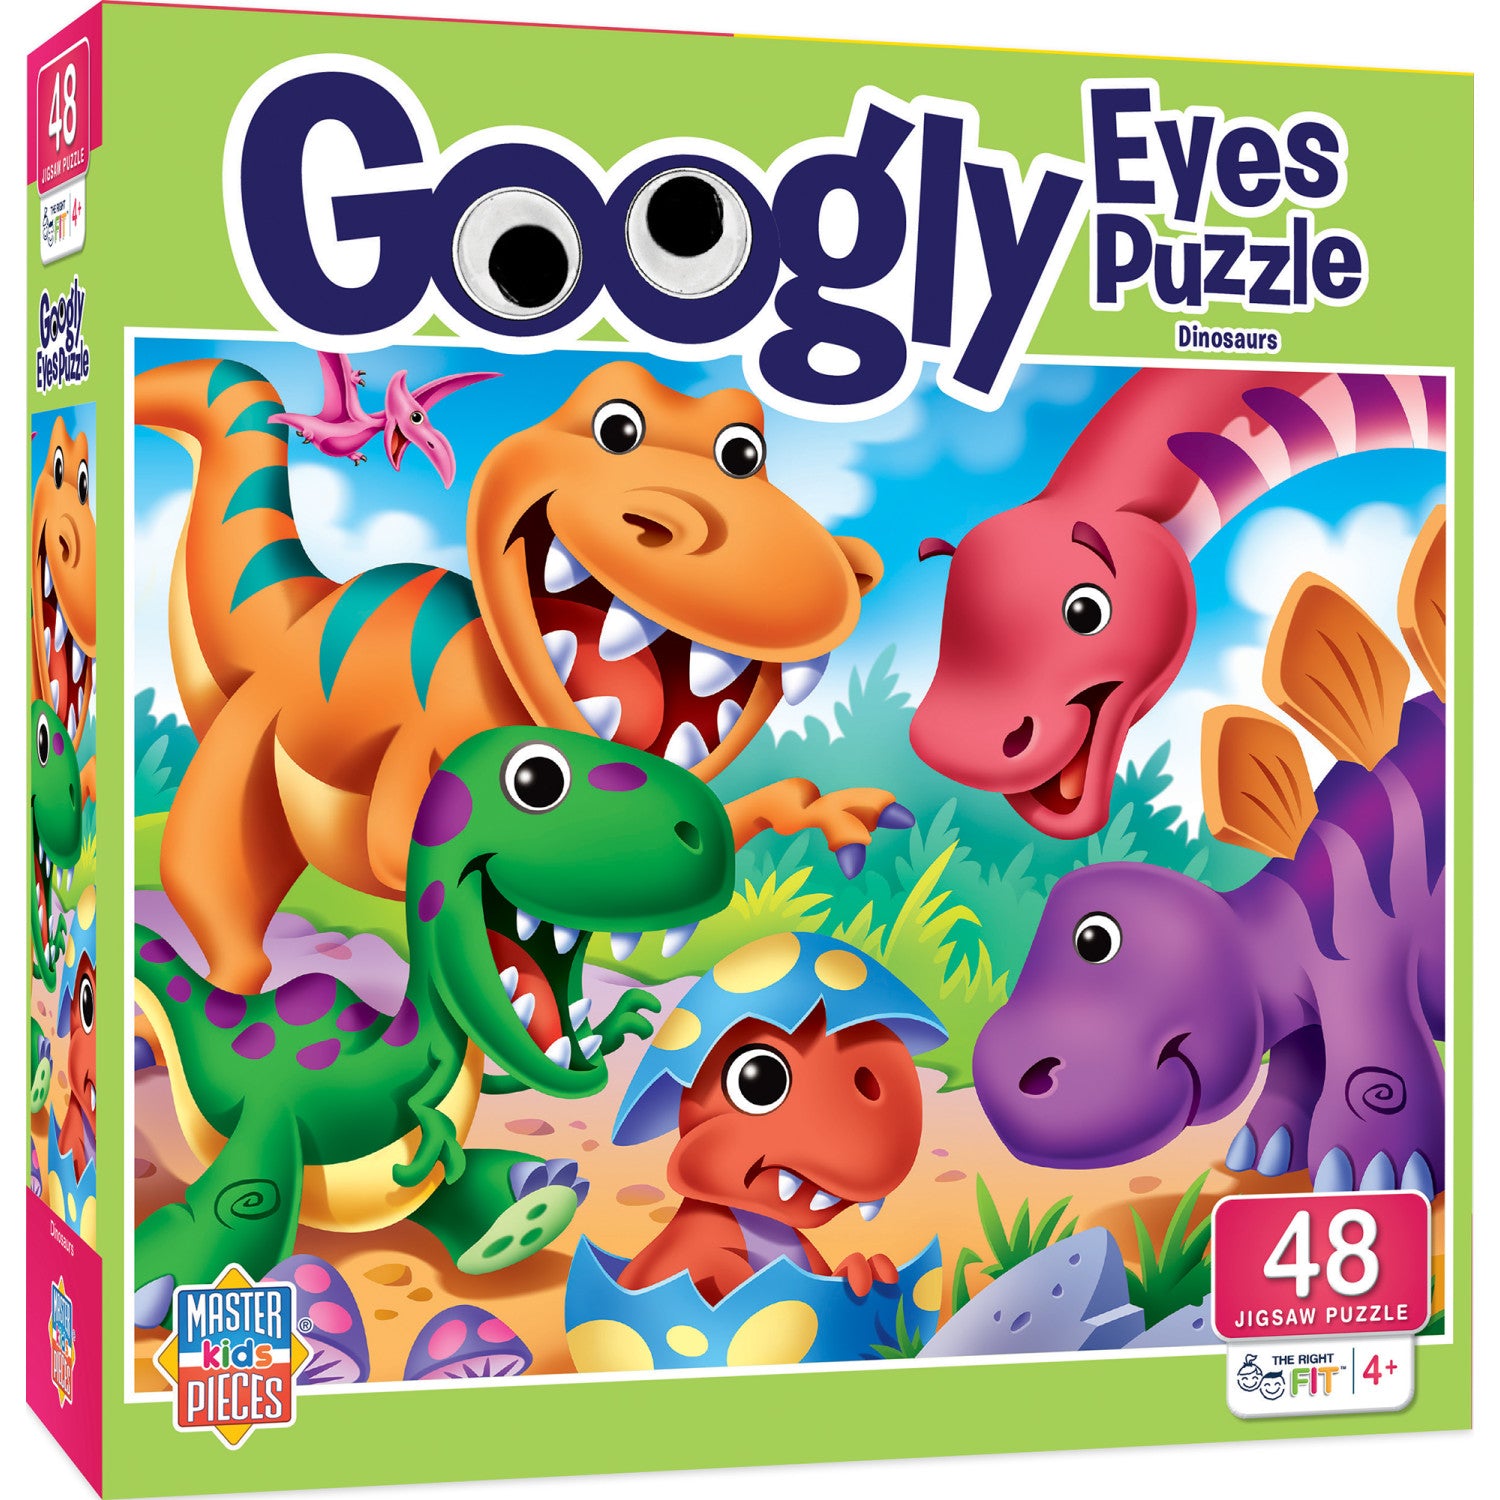 Googly Eyes - Dinosaurs 48 Piece Jigsaw Puzzle